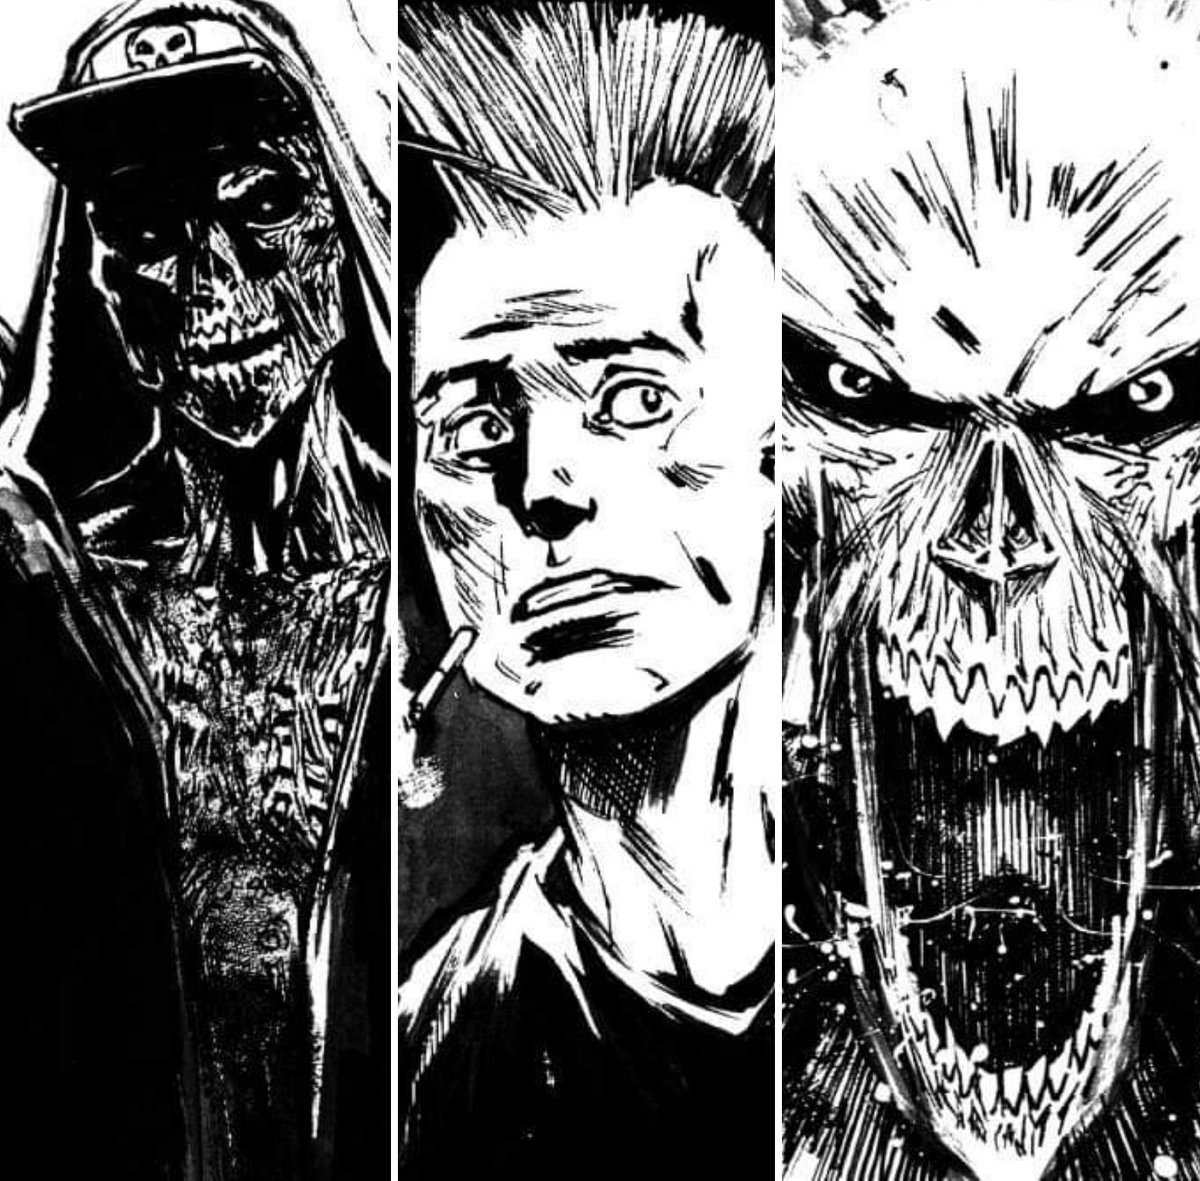 Some random panels from Rad Wraith, coming to Kickstarter May 1st! #horror #comicart #Kickstarter 